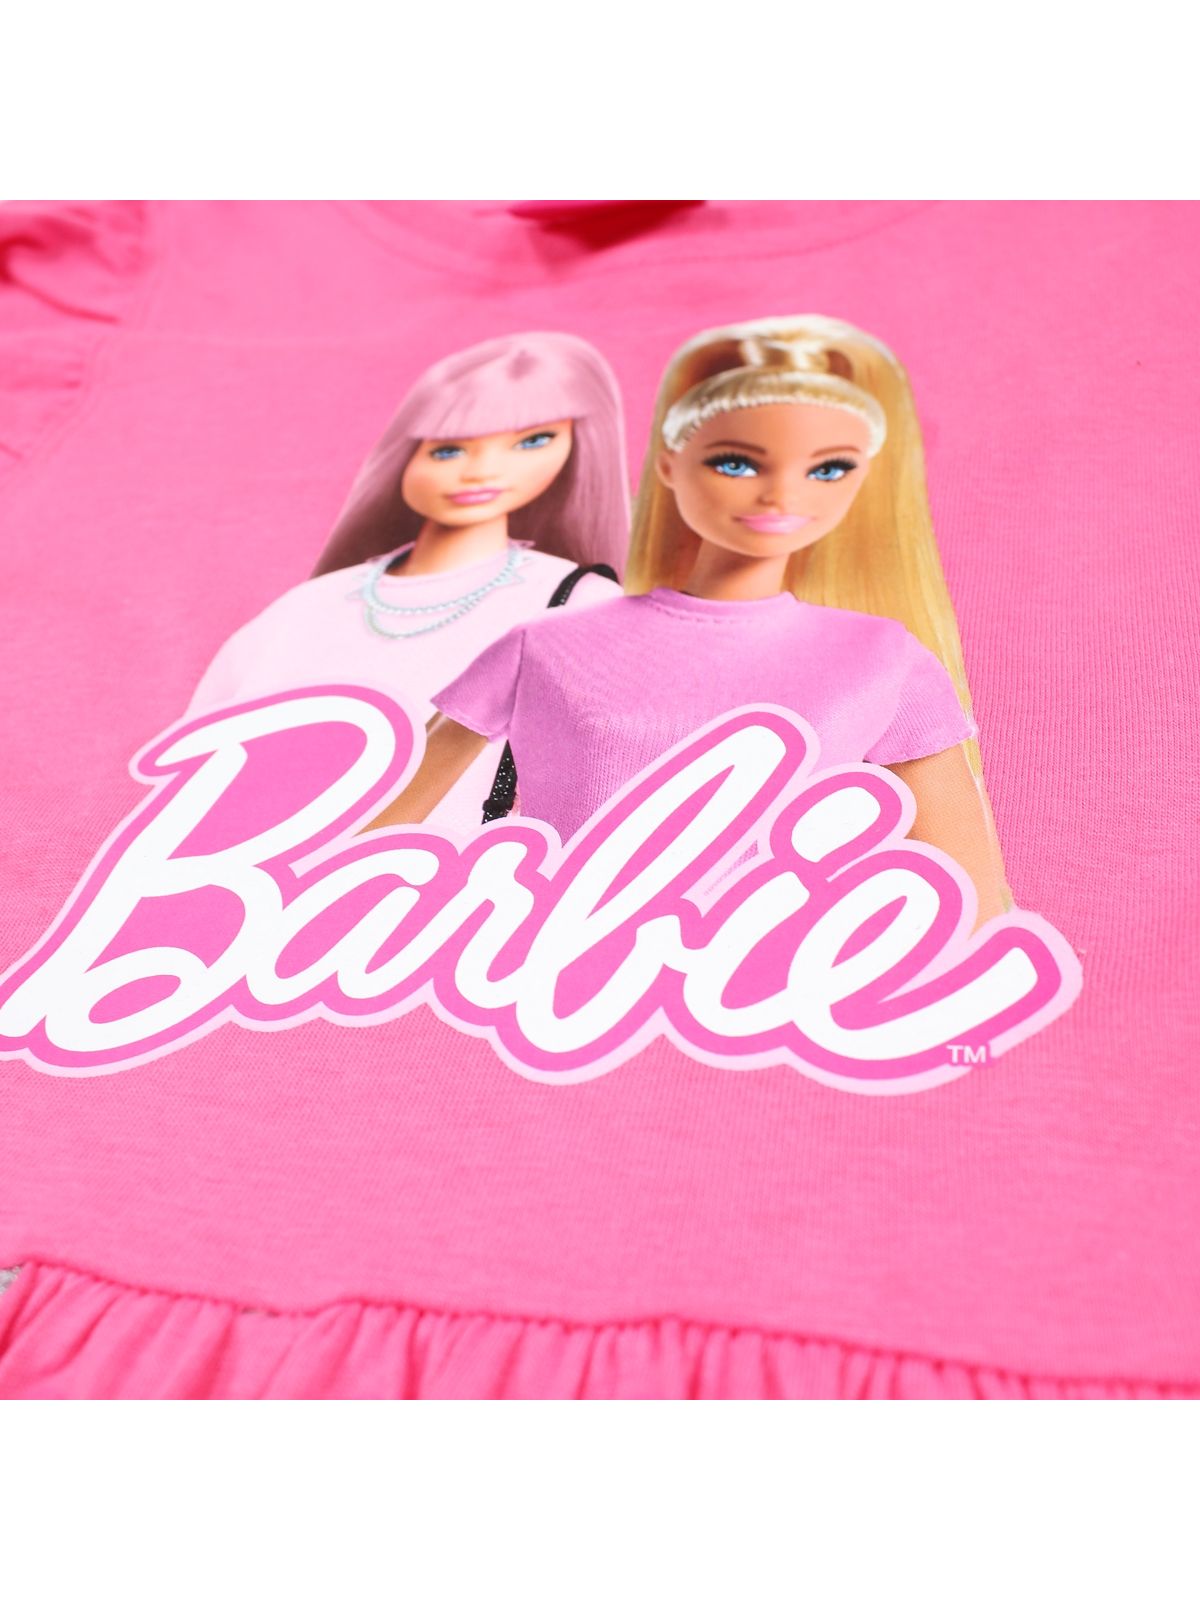 Barbie-jurk.